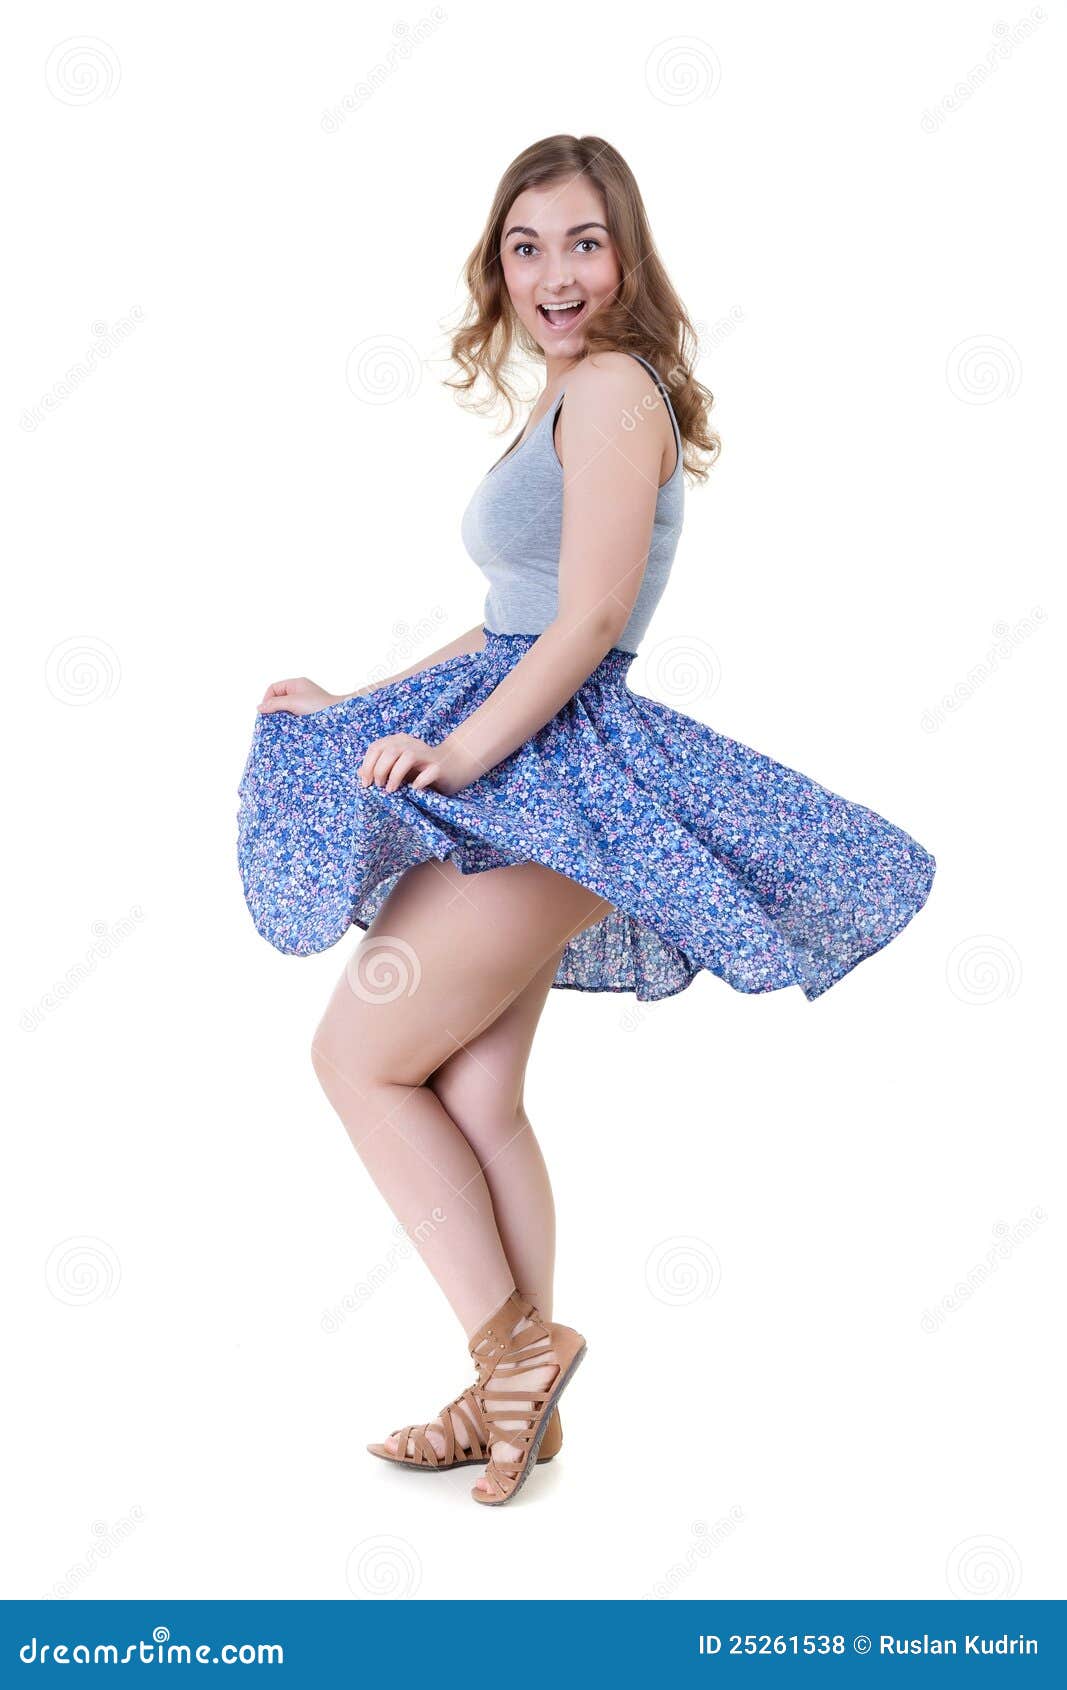 girl lifts up dress